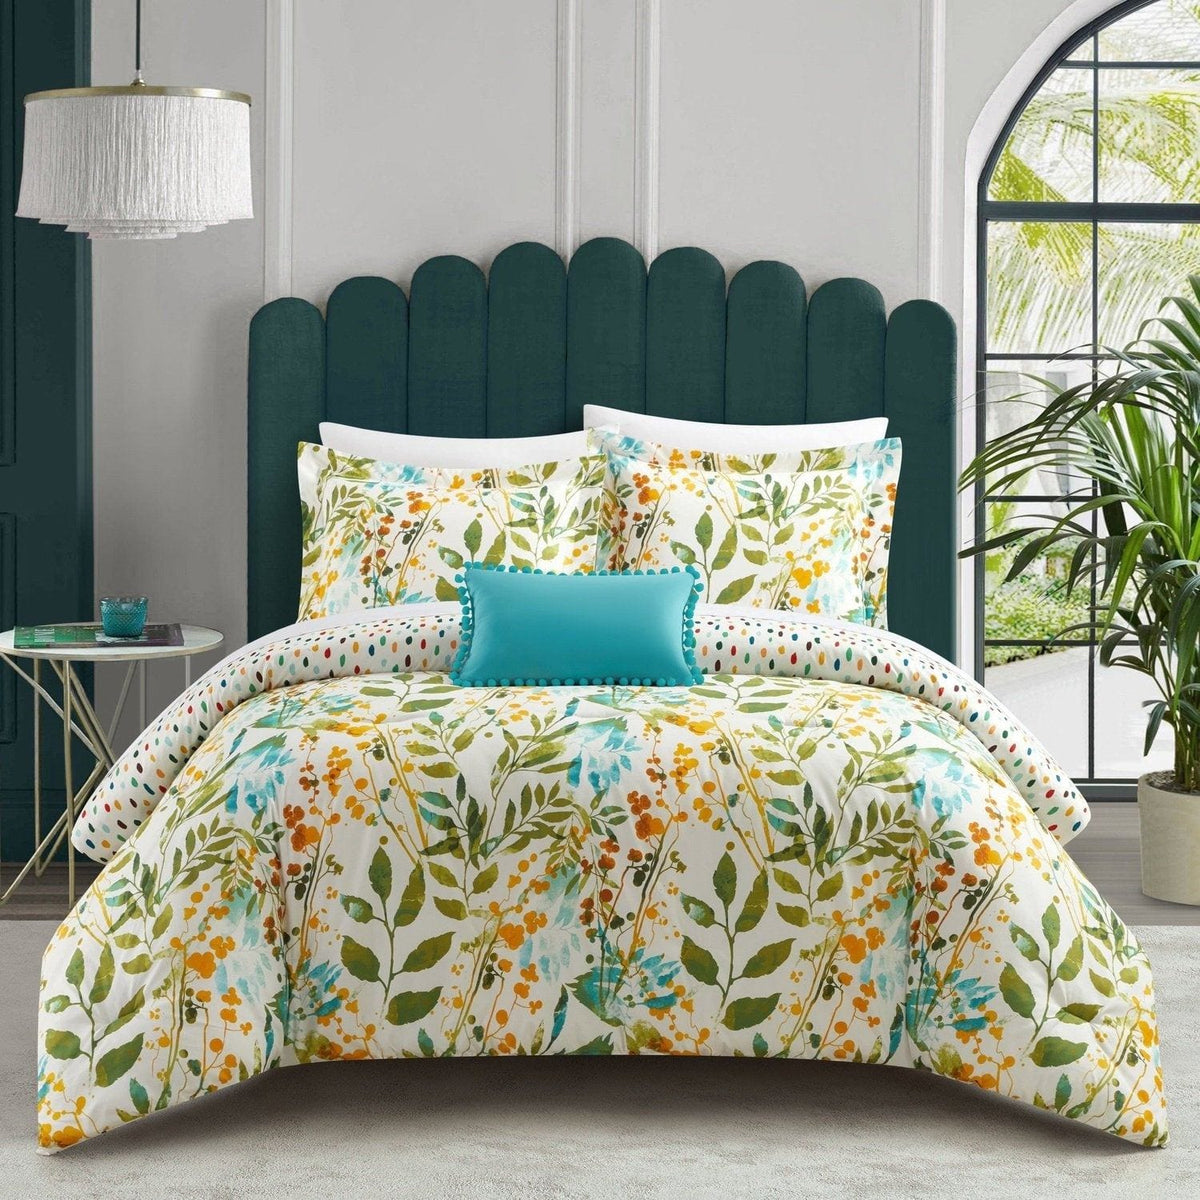 Chic Home Blaire 4 Piece Reversible Floral Print Comforter Set Twin